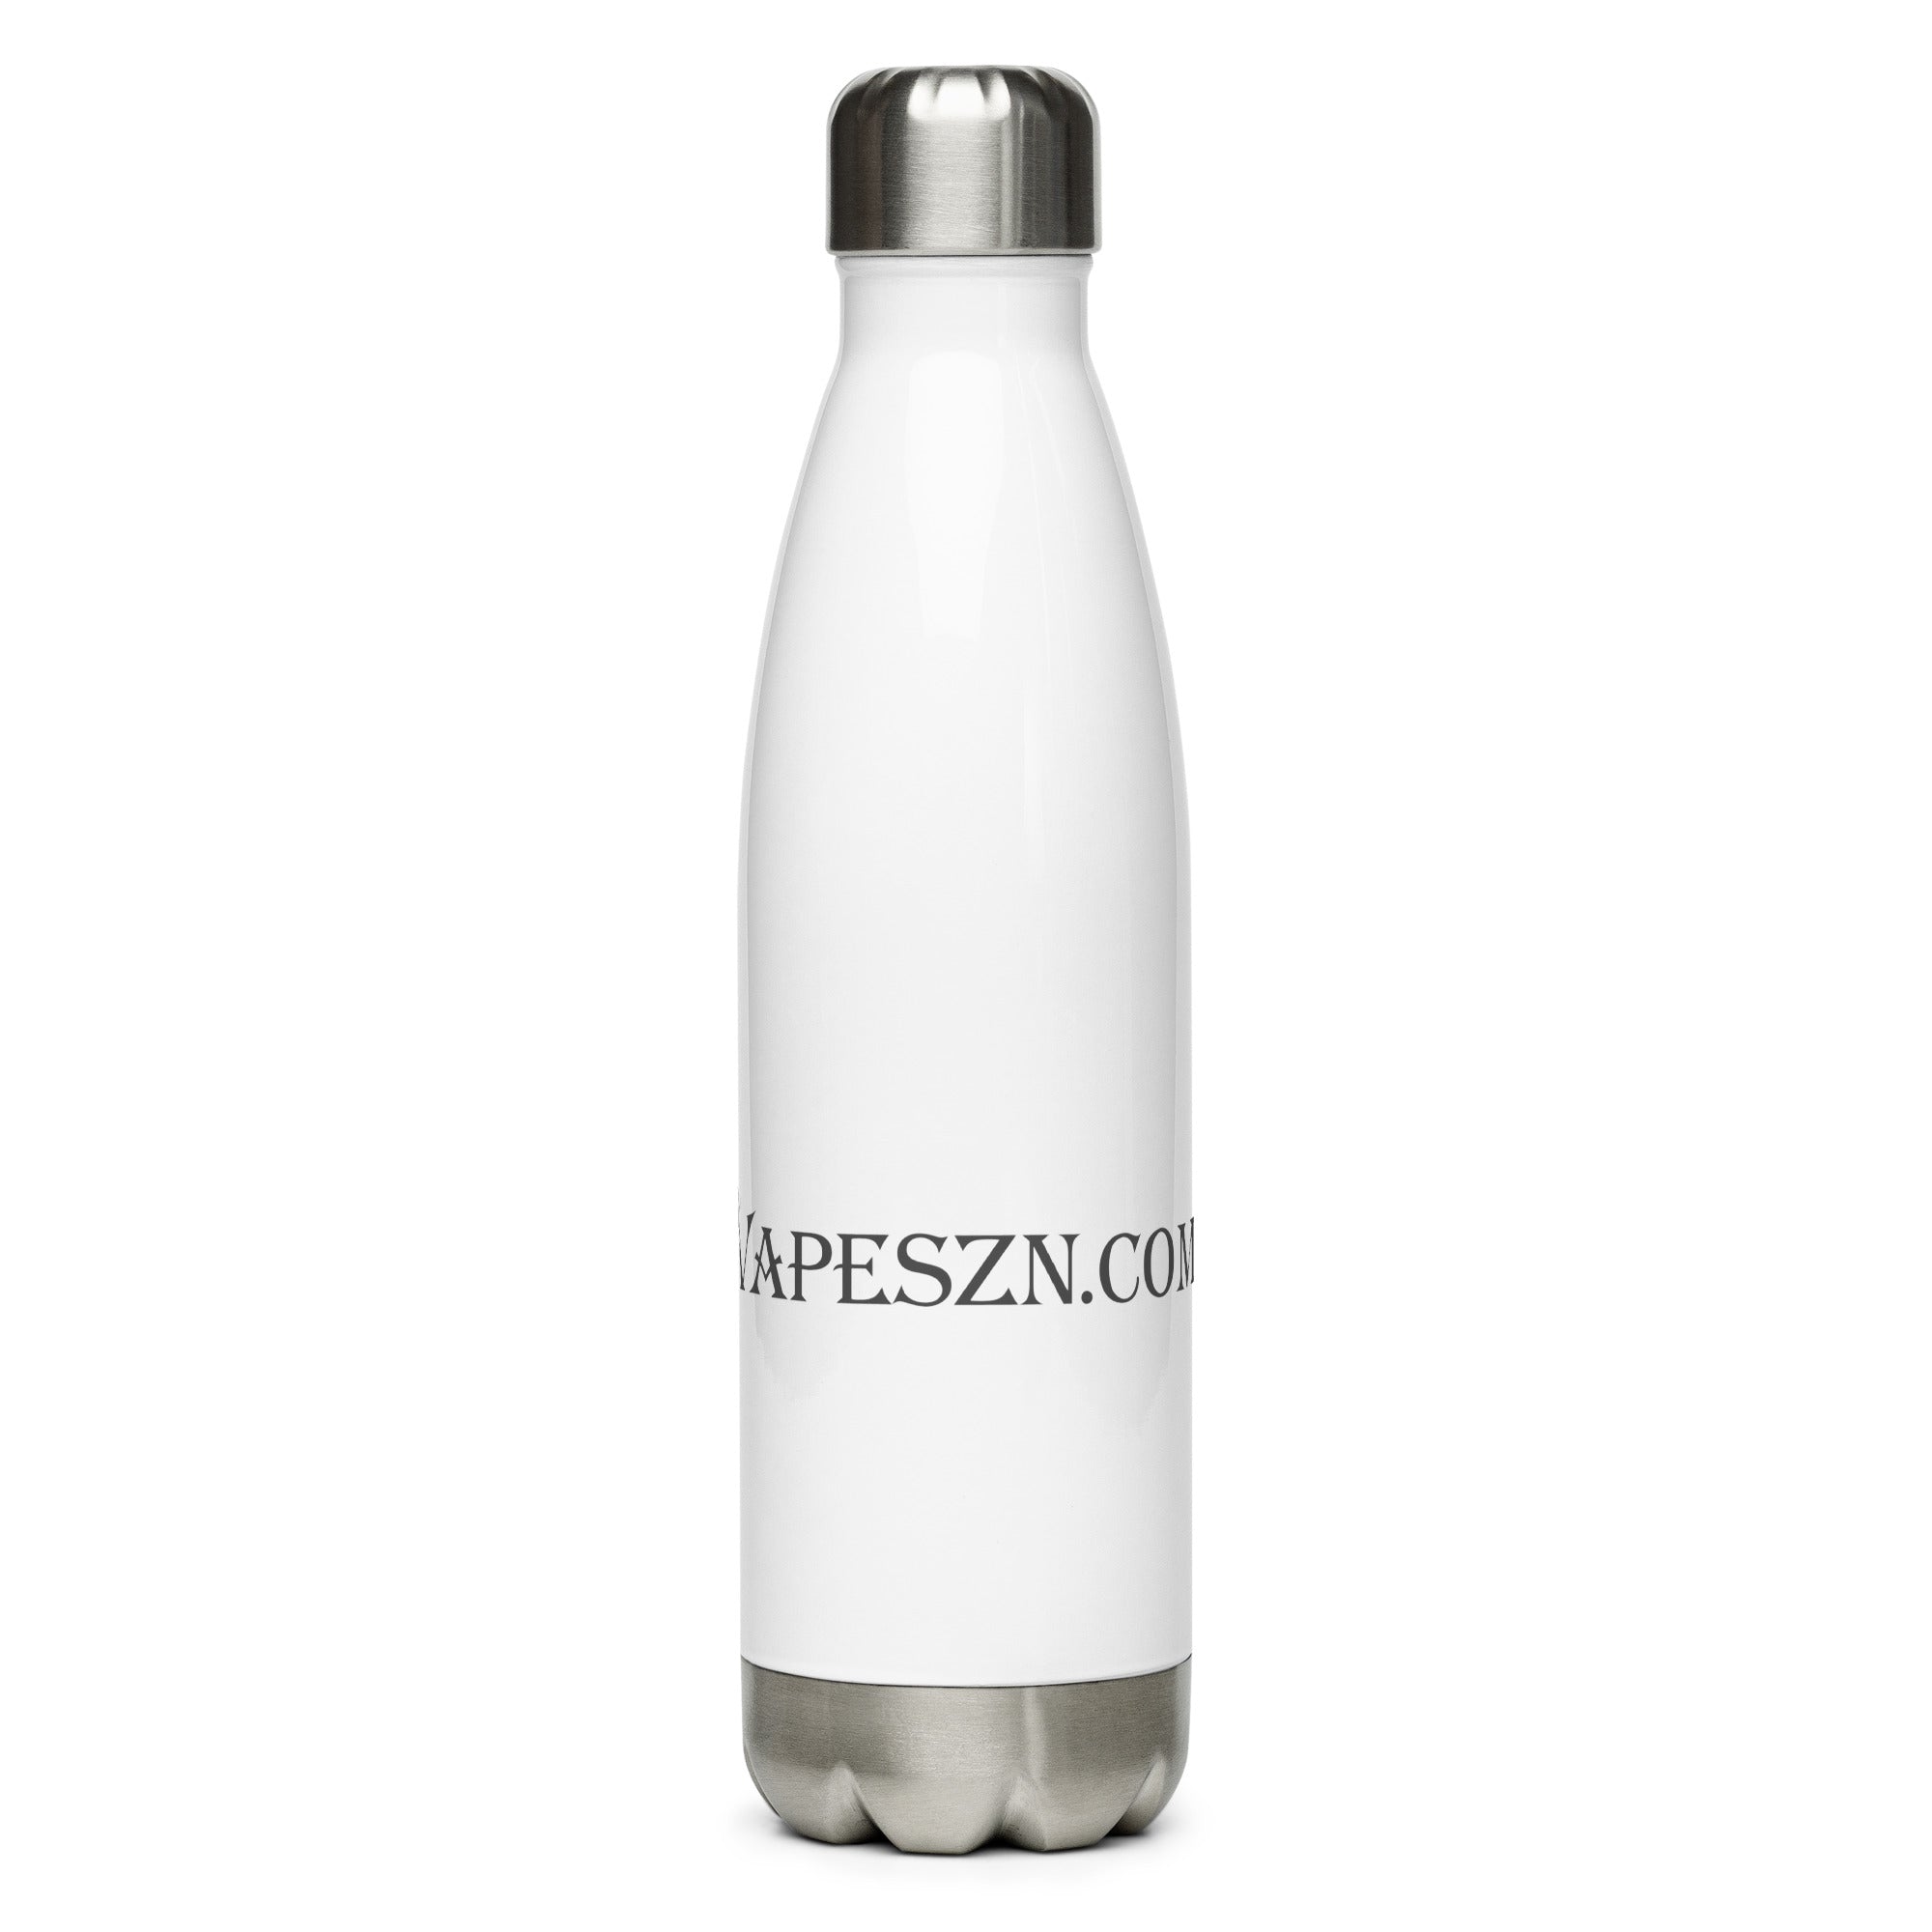 VapeSzn Stainless Steel Water Bottle